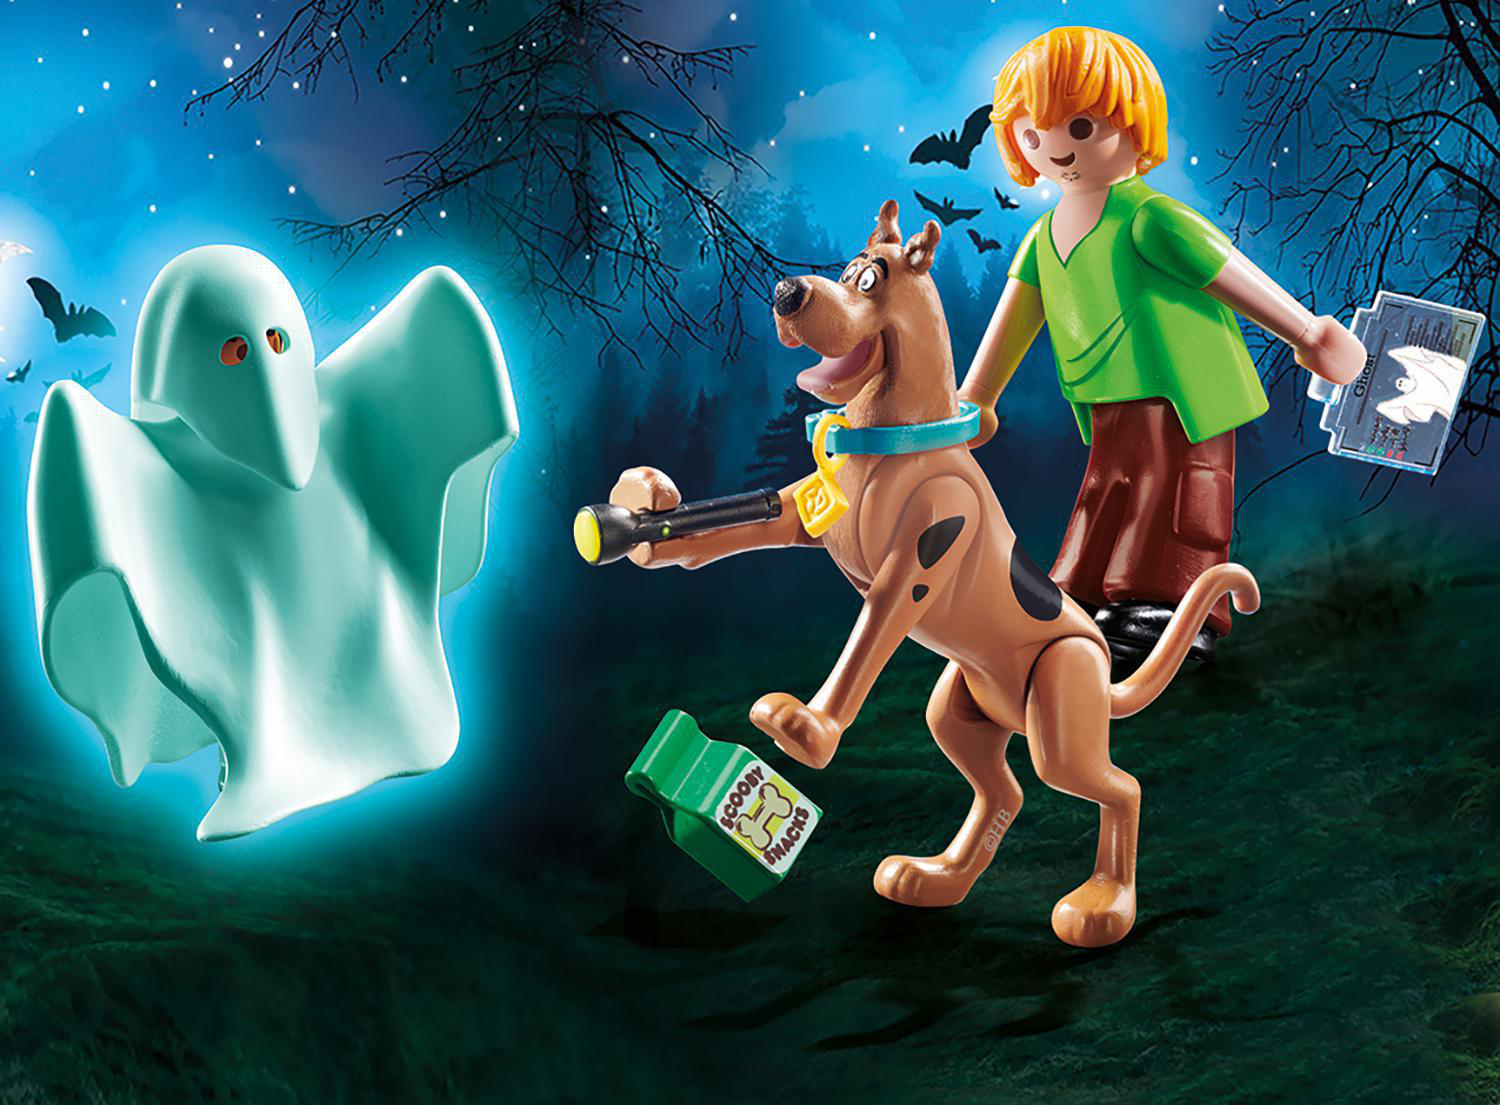 Geist & PLAYMOBIL mit Spielset, SCOOBY-DOO! Scooby Mehrfarbig Shaggy 70287